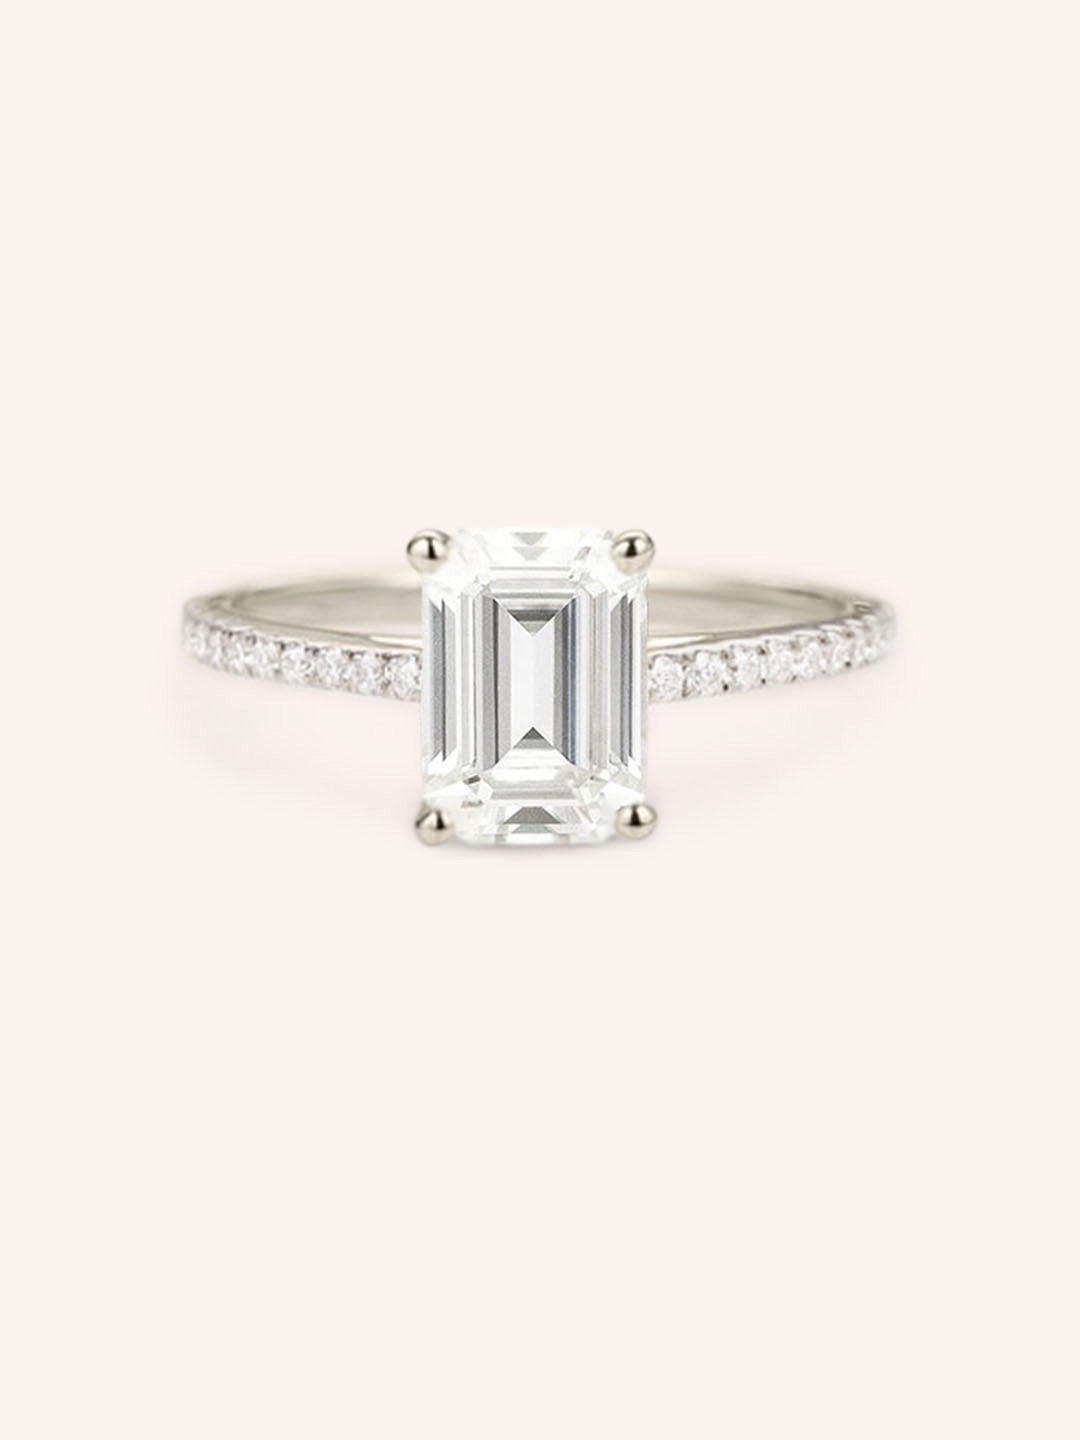 Morning Rose Emerald Cut Moissanite Diamond Engagement Ring